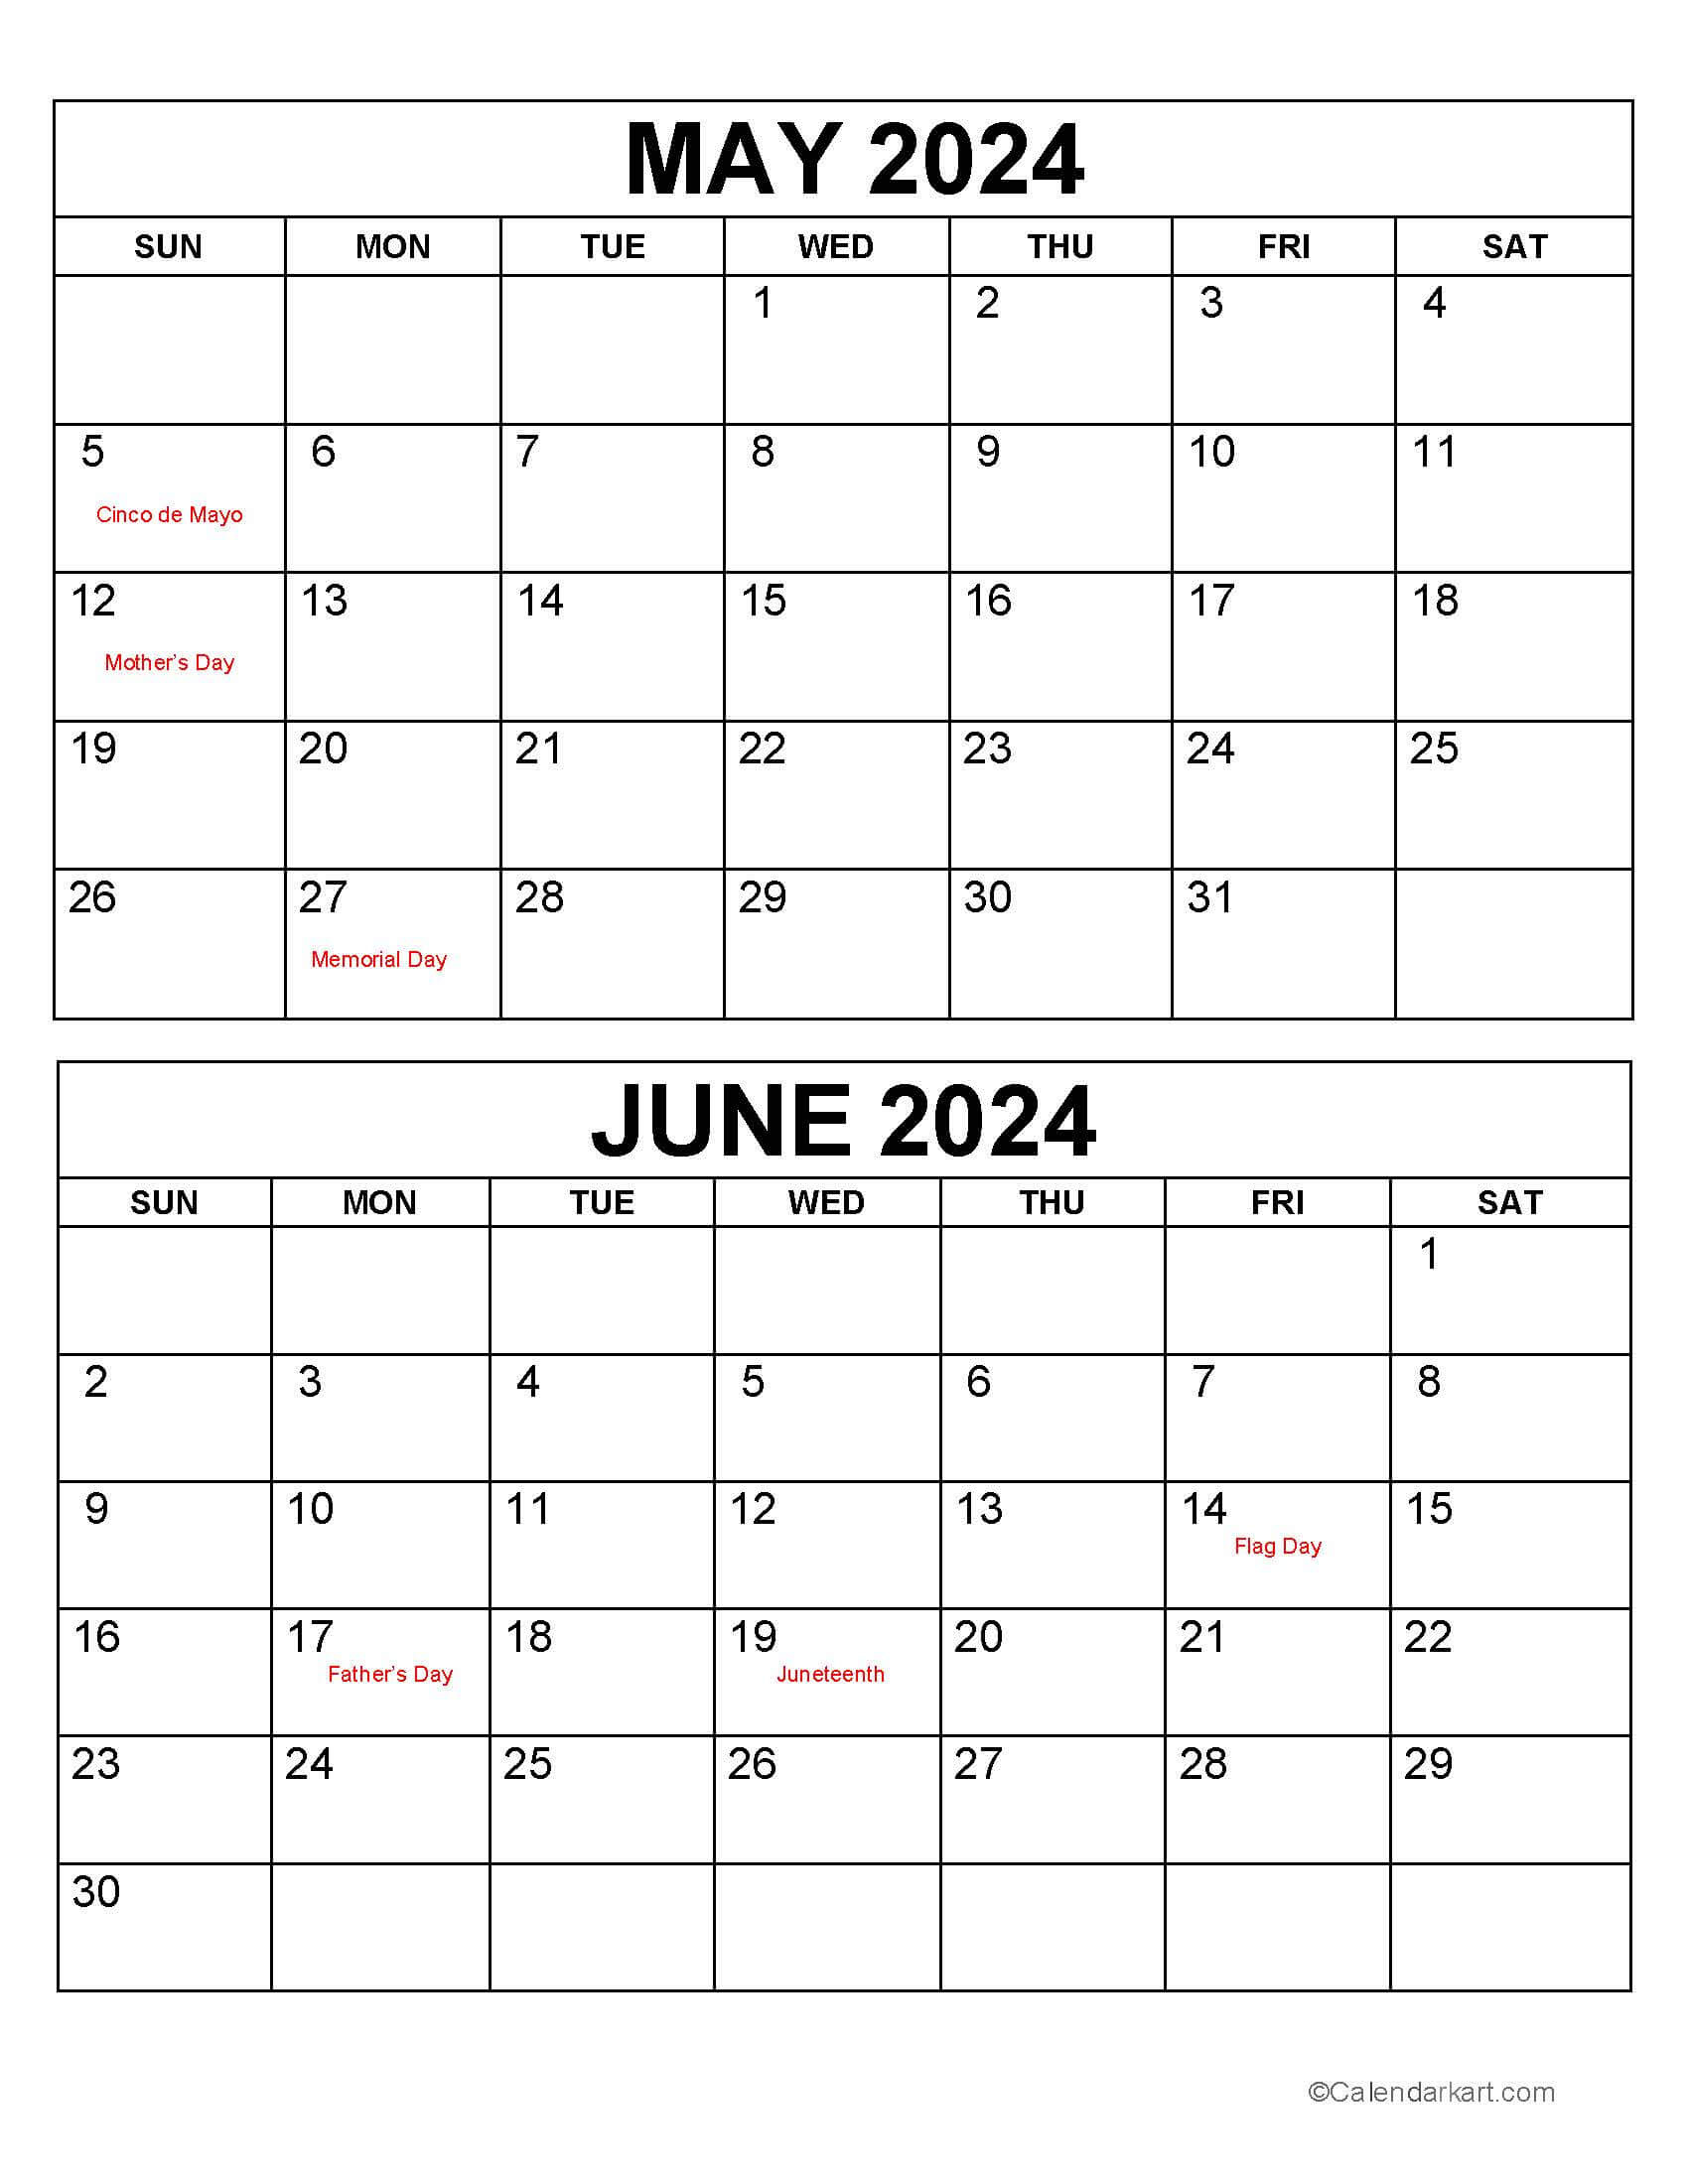 May June 2024 Calendars (3Rd Bi-Monthly) - Calendarkart with May June 2024 Calendar